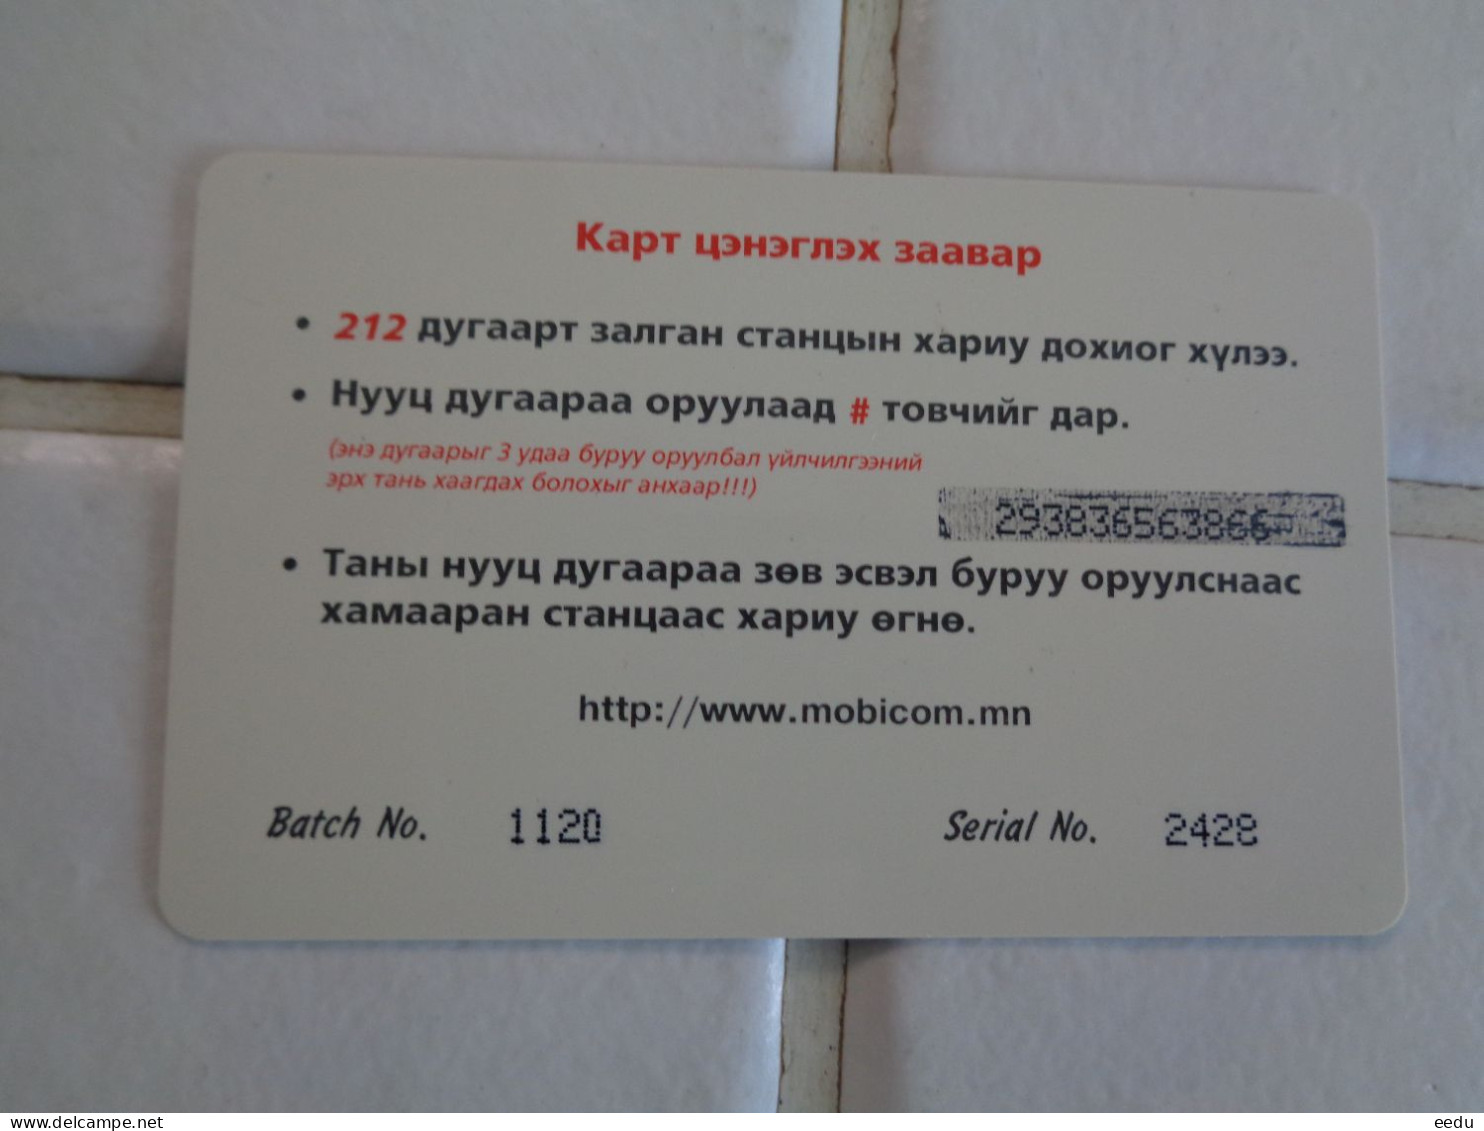 Mongolia Phonecard - Mongolie